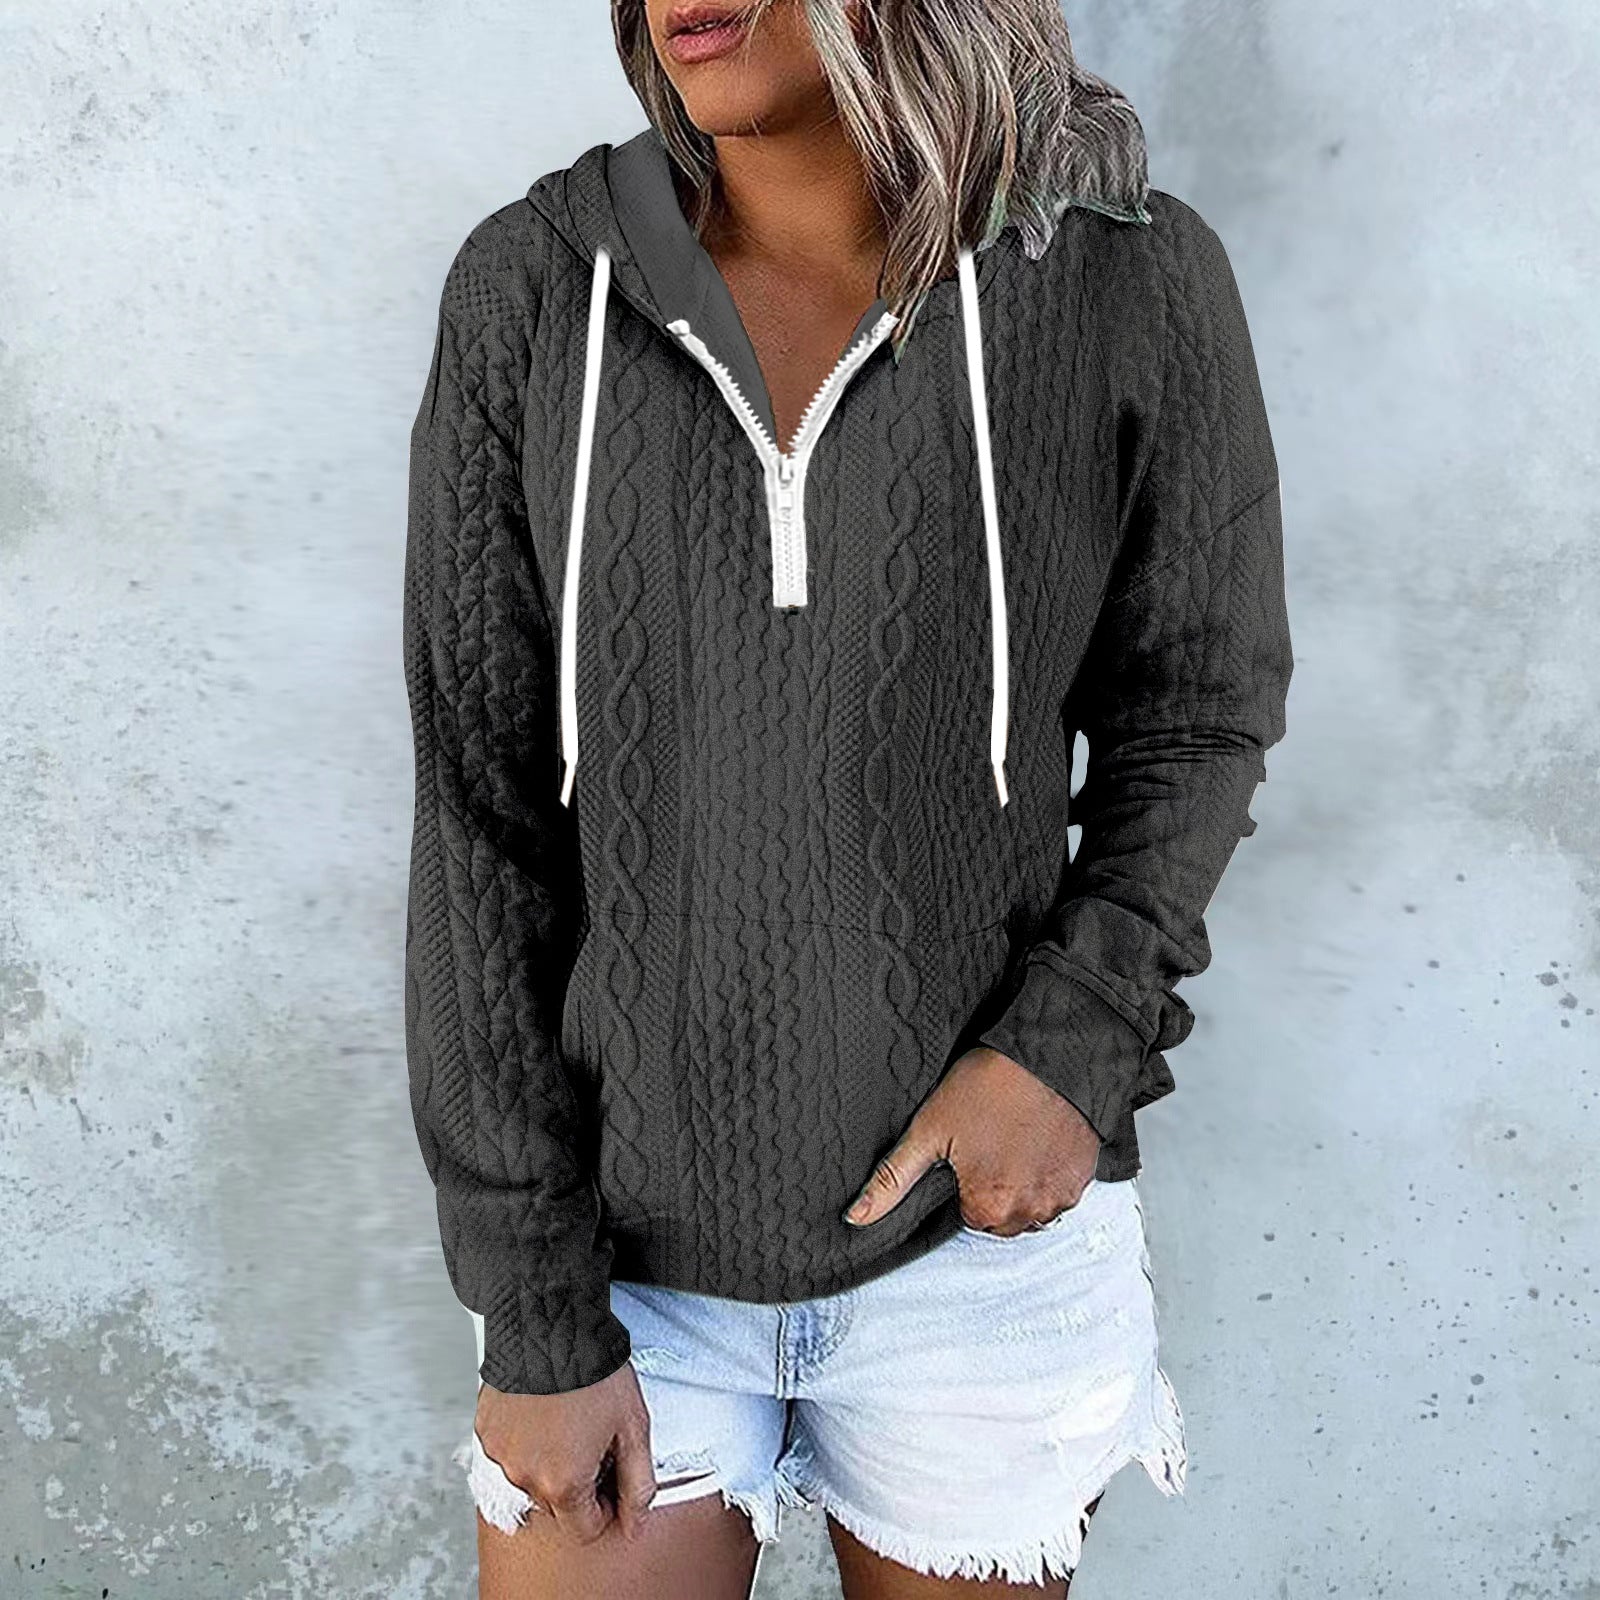 Twist Texture Design Hoodie Drawstring Sweatshirt Fashion Women Daily Clothing